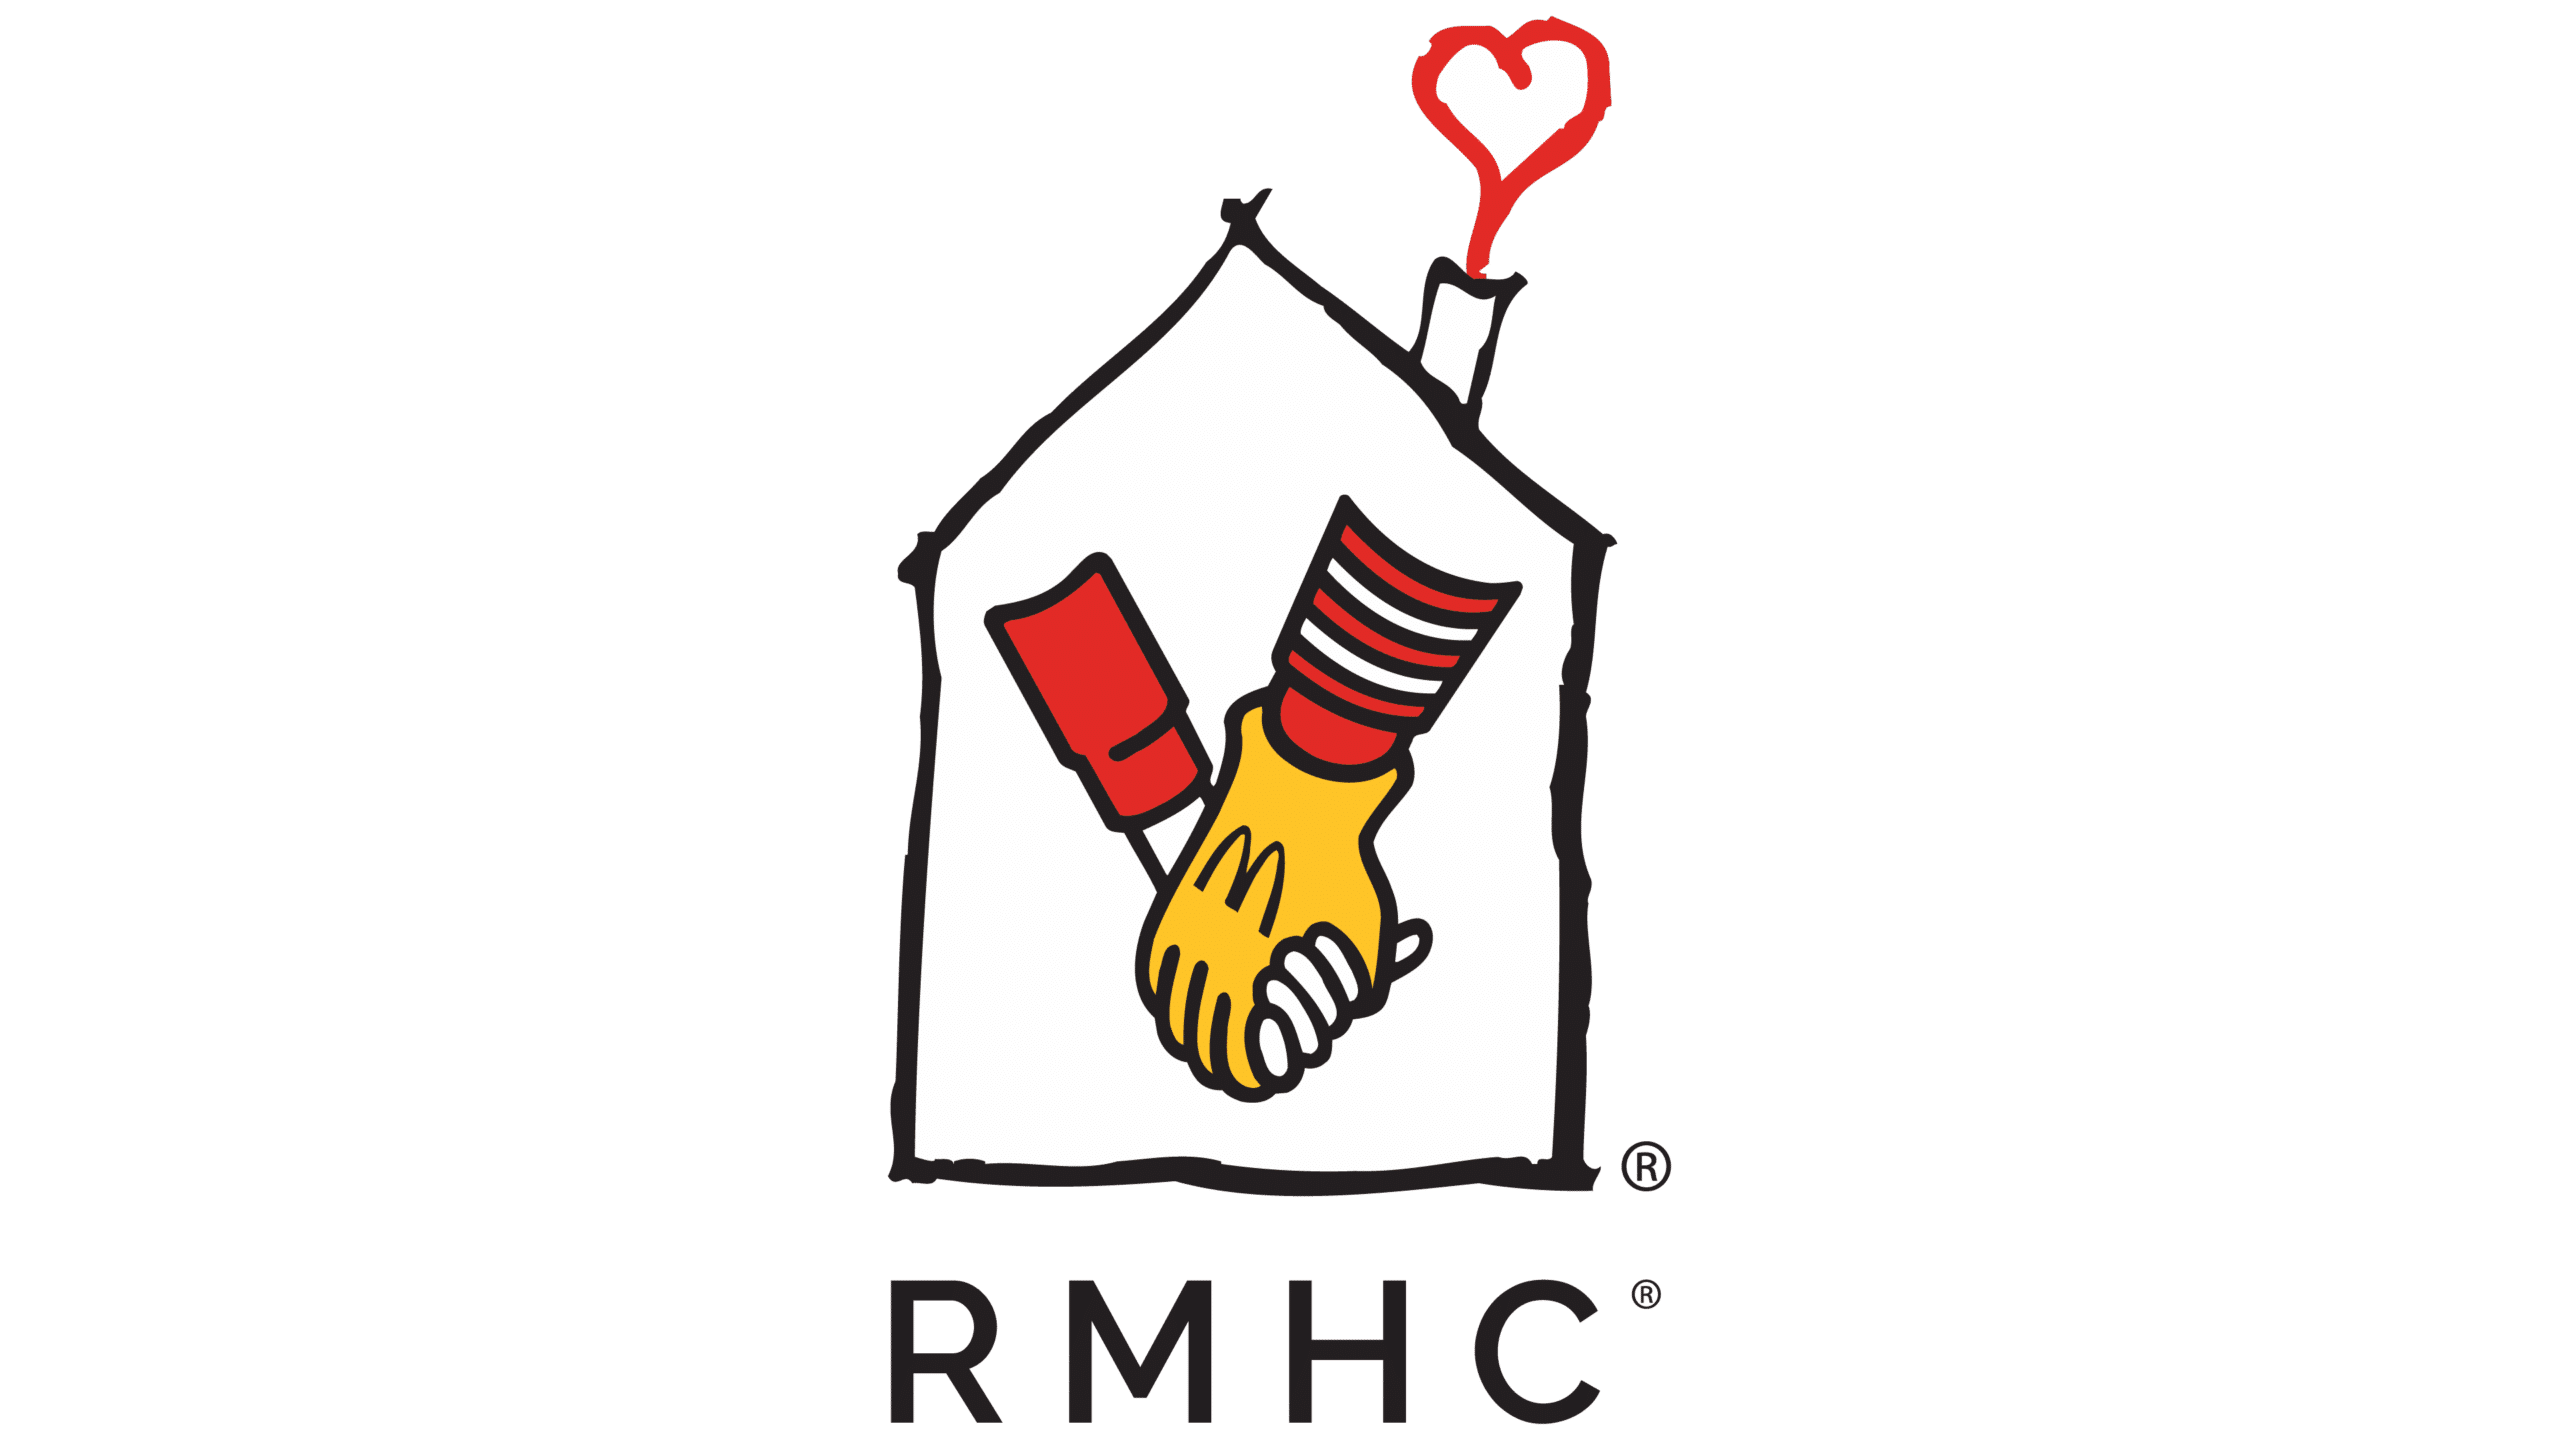 RMHC Ronald McDonald House Charities logo